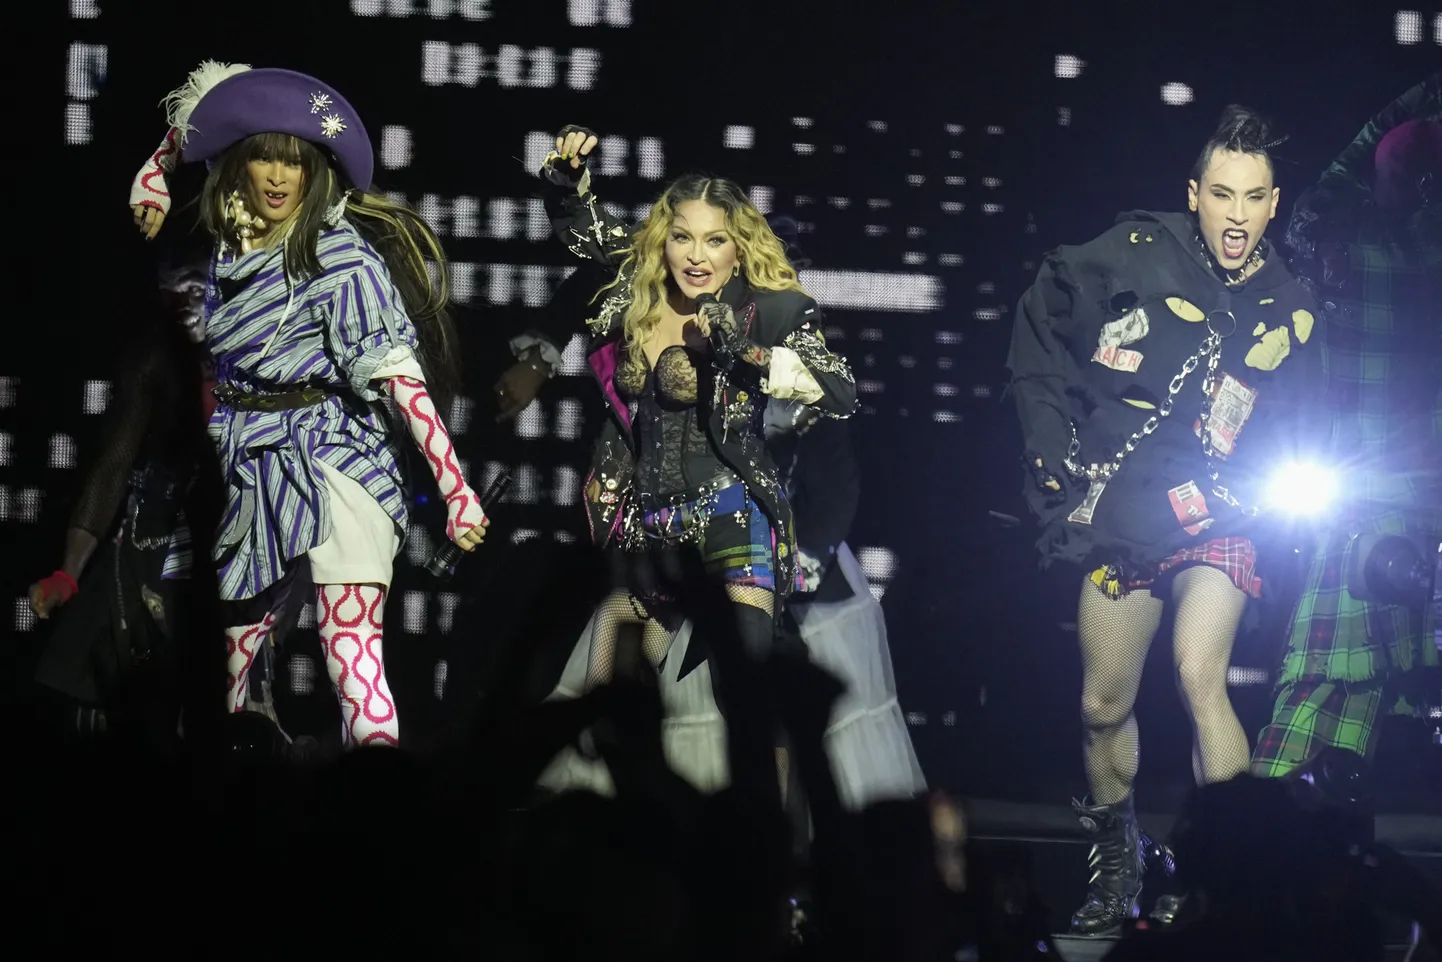 Madonna andis oma tuuri «The Celebration Tour» viimase kontserdi Copacabana rannal Rio de Janeiros ja seda täiesti tasuta.